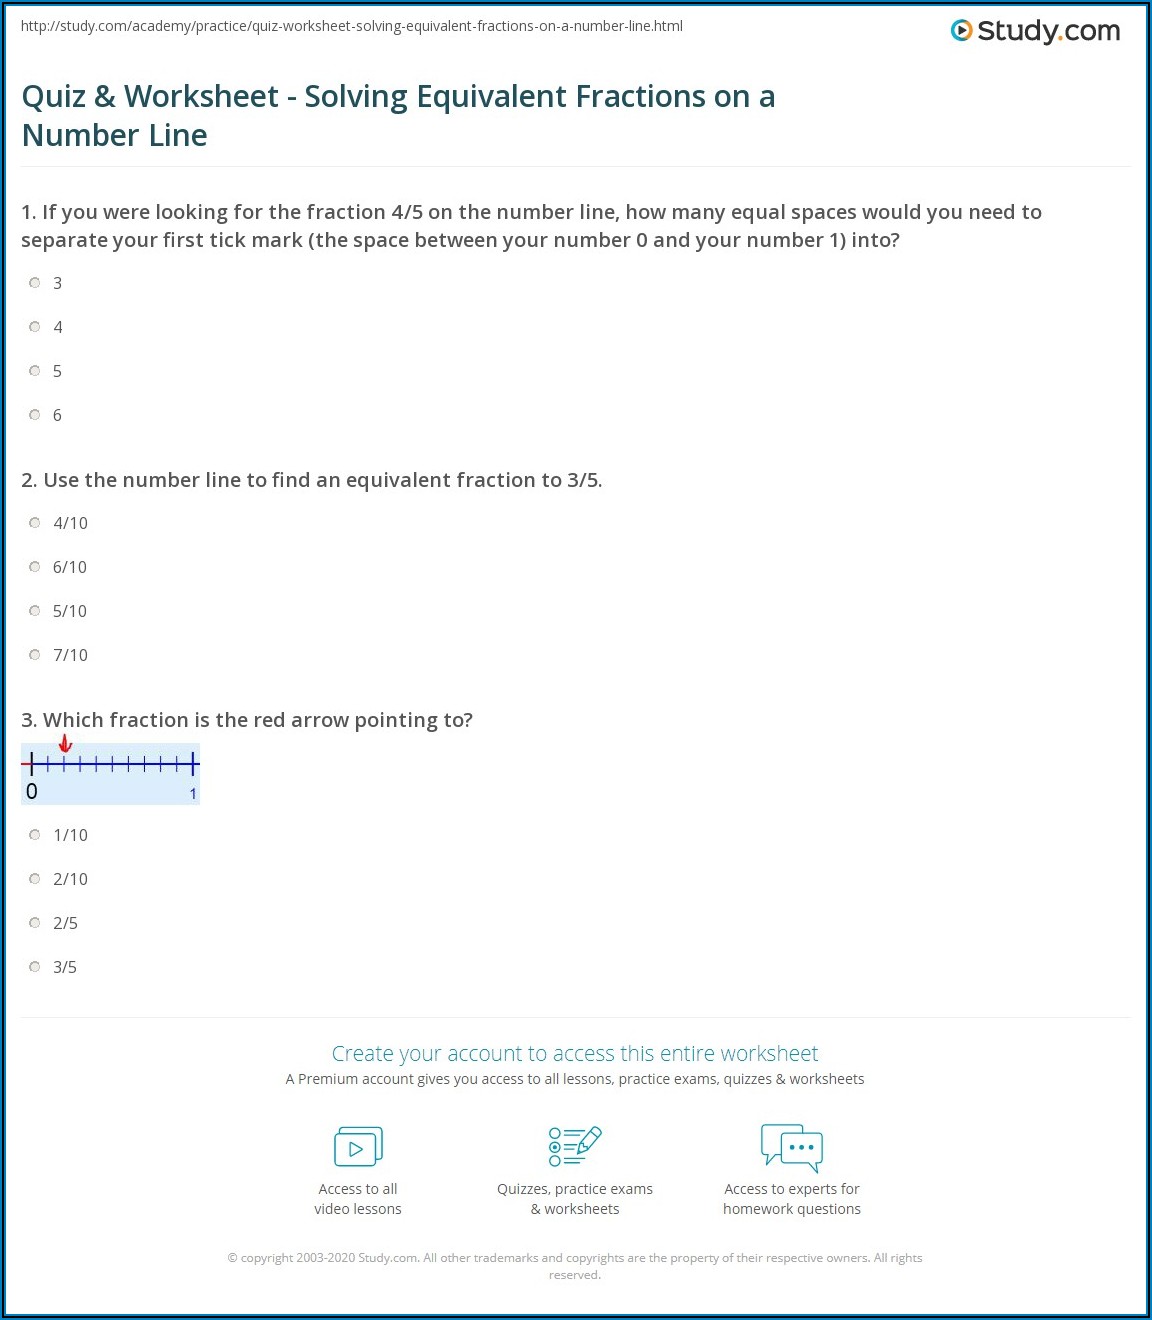 Worksheet Fractions On Number Line Worksheet Resume Template Collections 6jzNQdwPgl